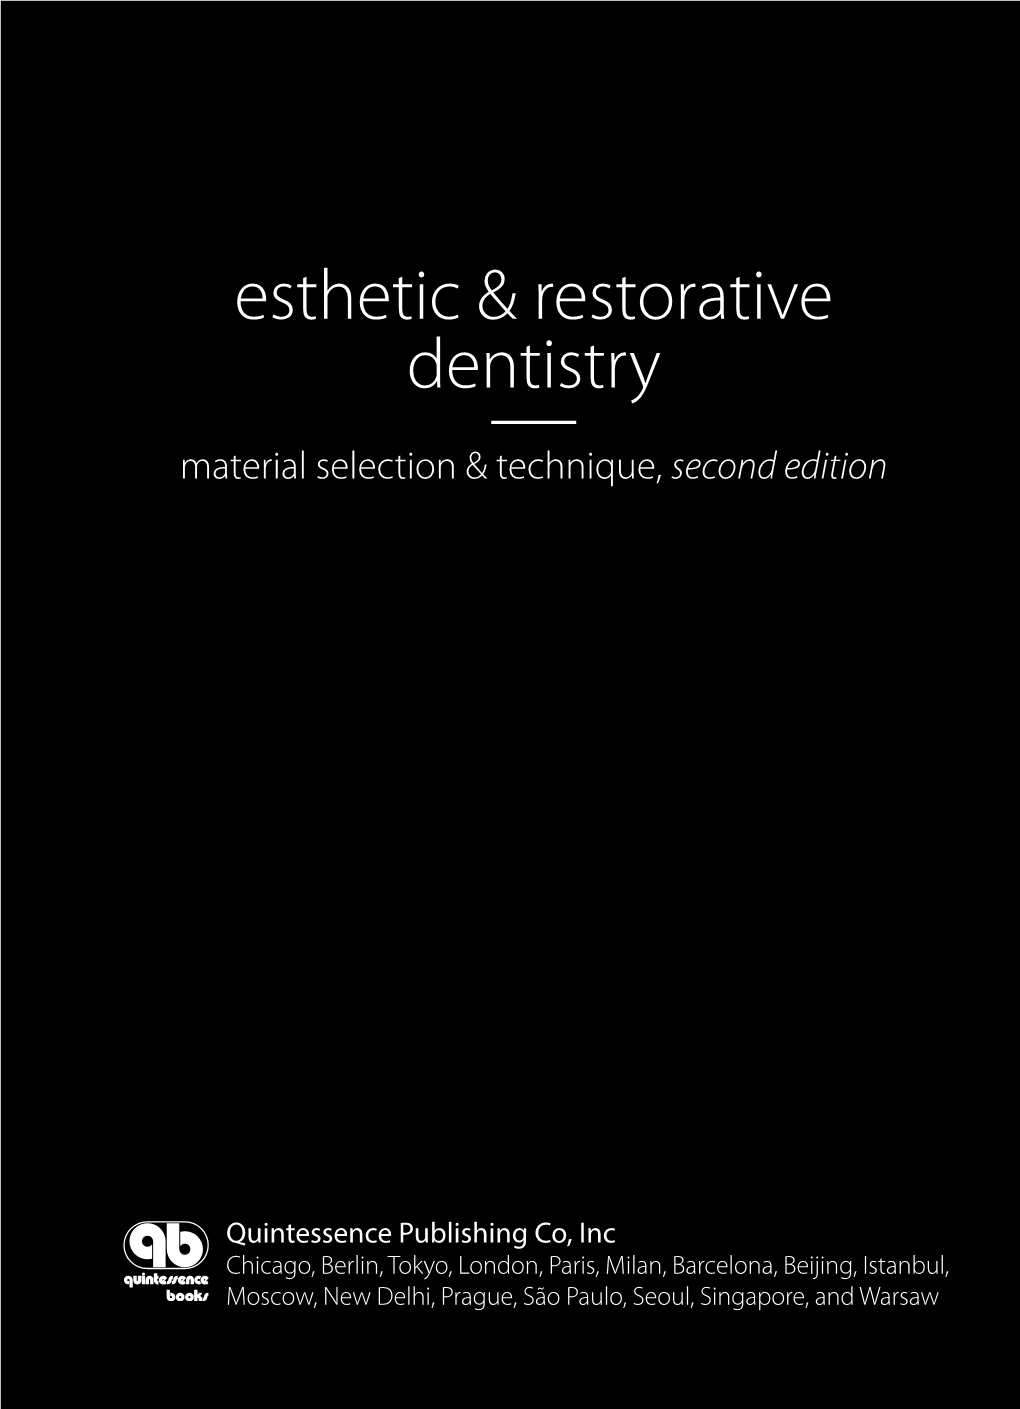 Esthetic & Restorative Dentistry